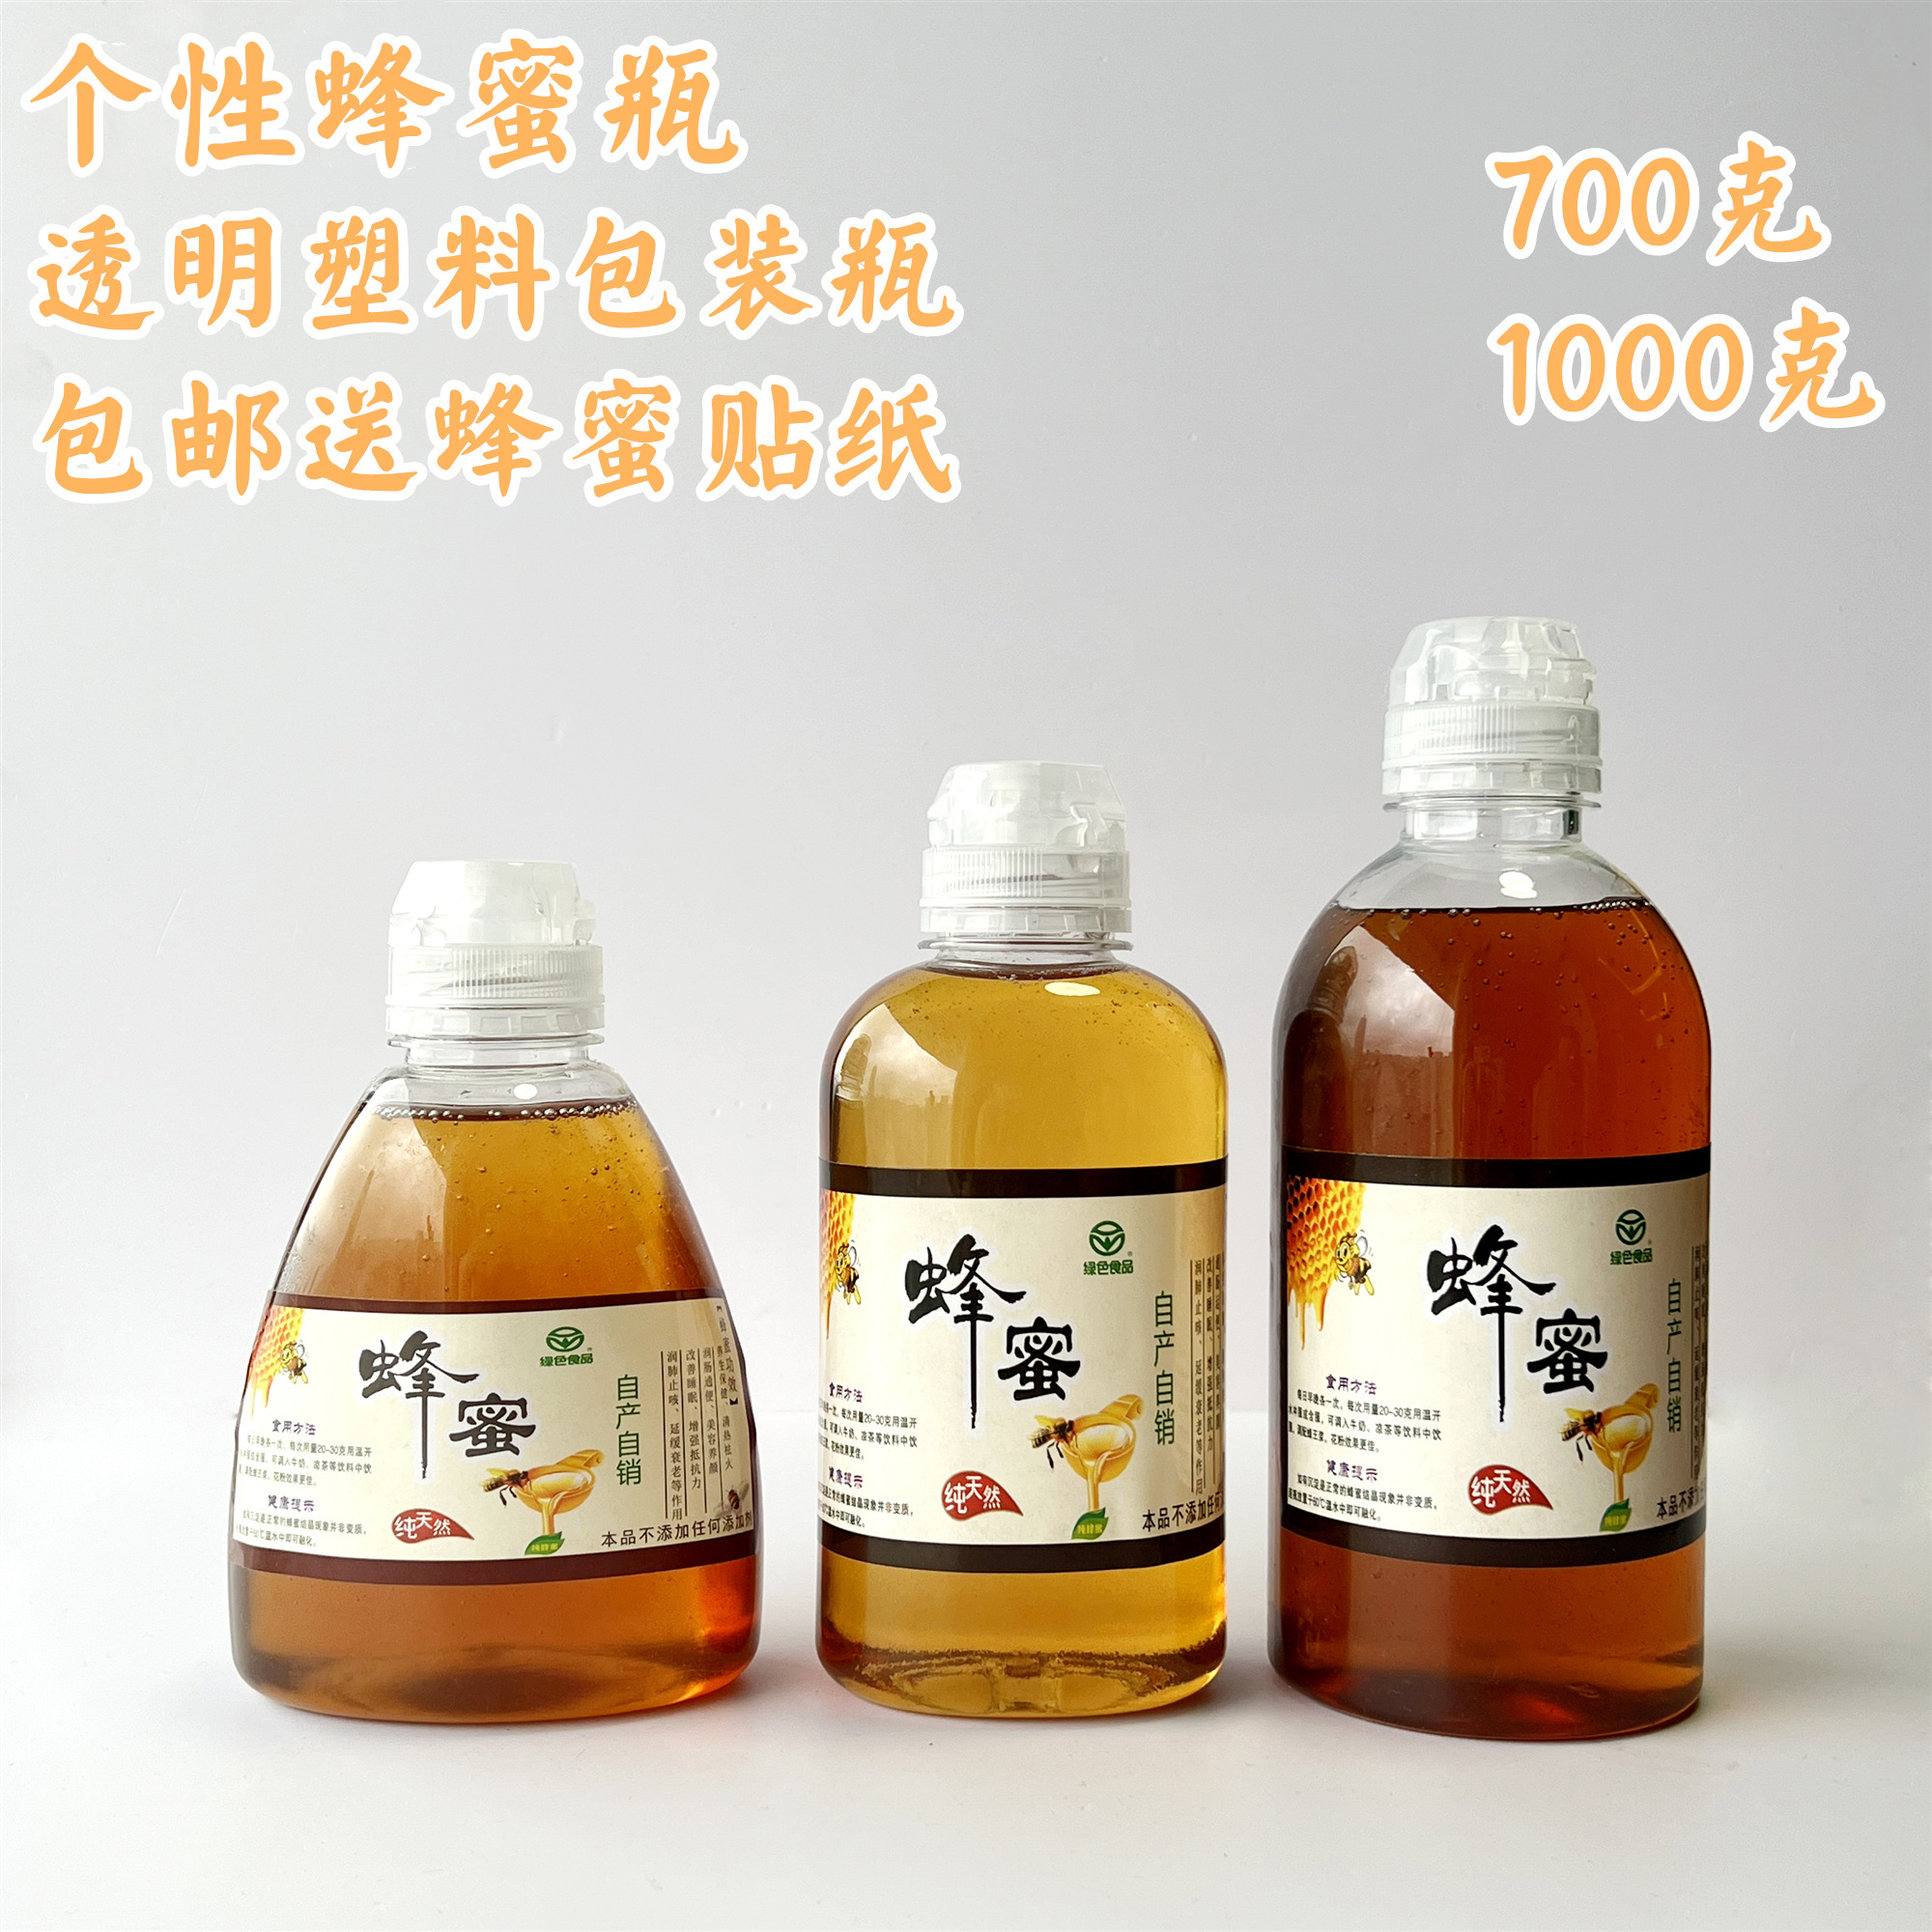 300g-500g-700g-1000g-1400g蜂蜜塑料瓶子 pet透明卡通挤压盖商用